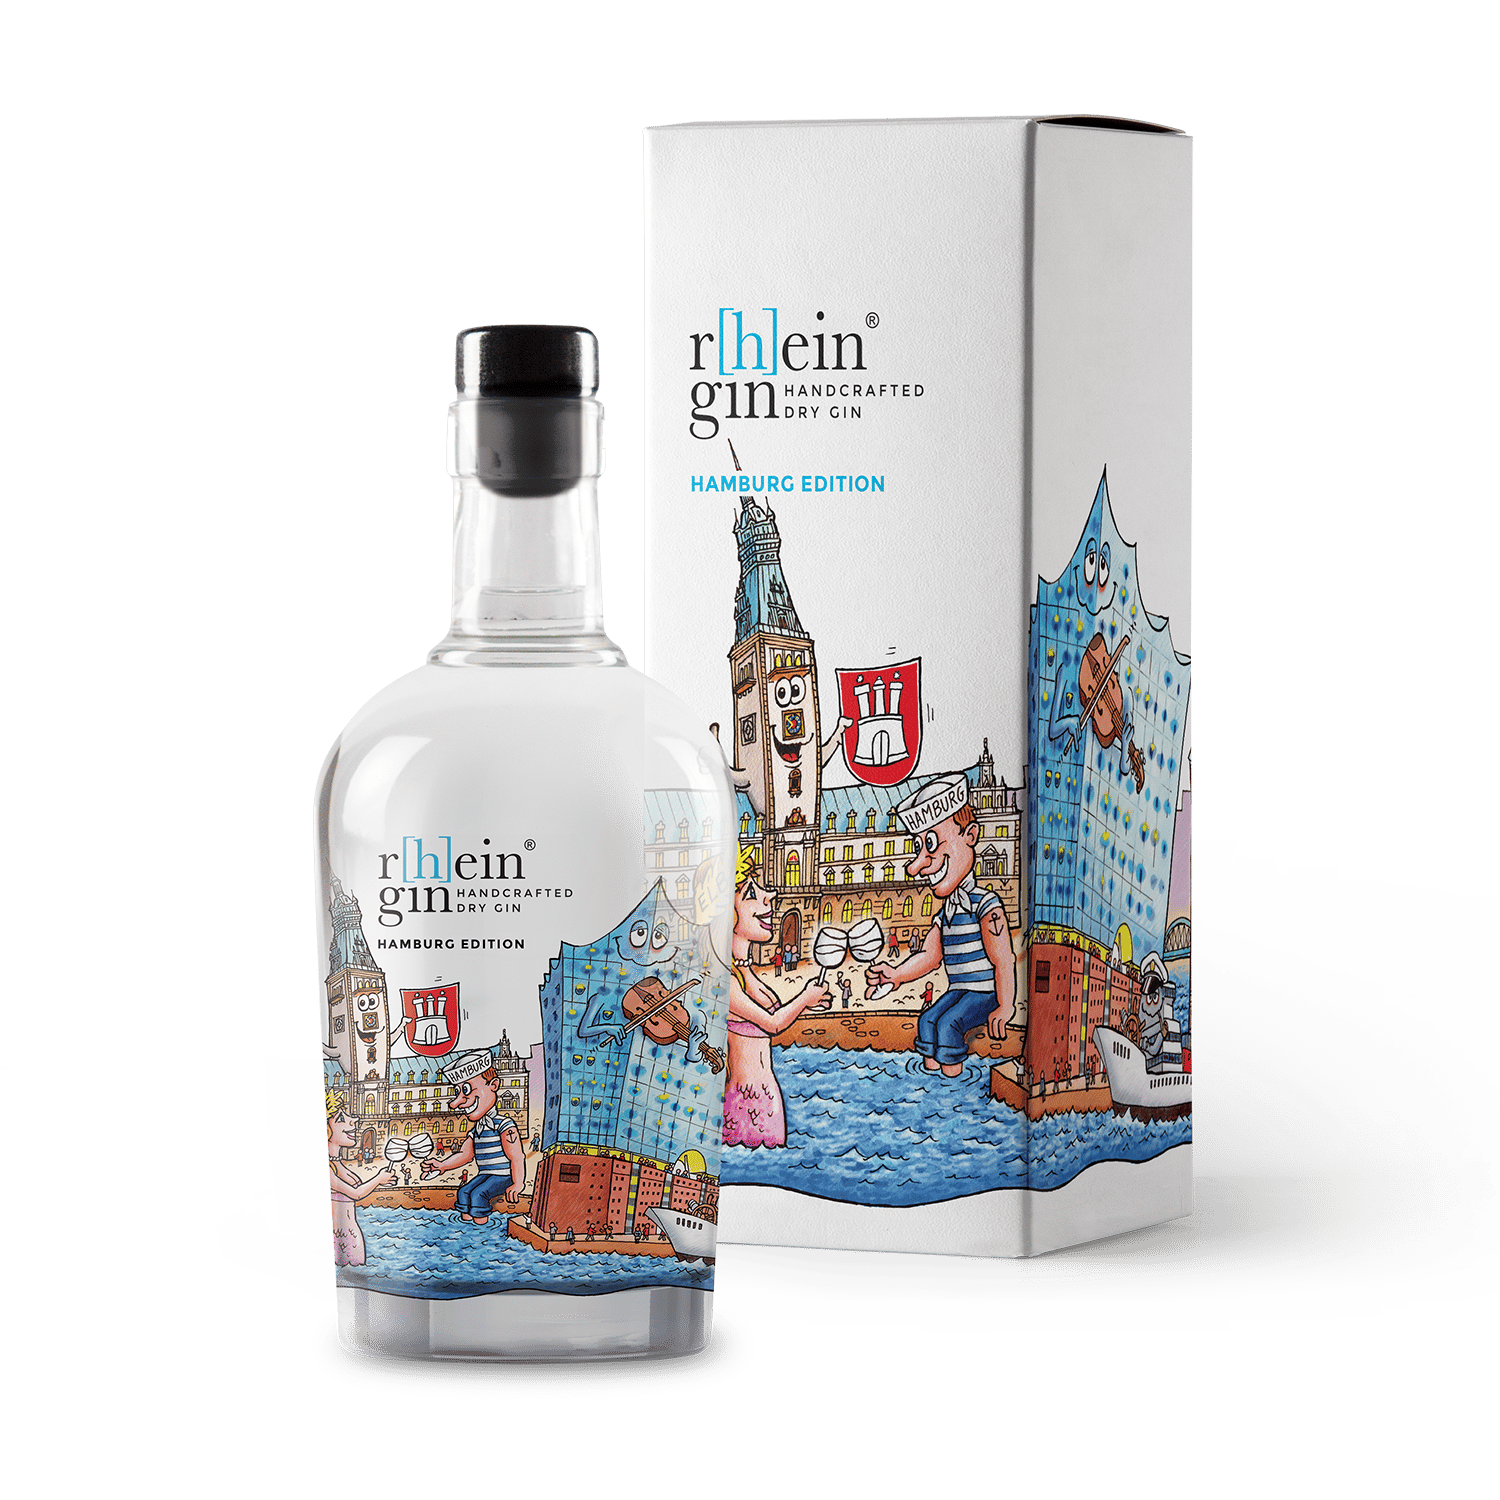 Handcrafted Dry Gin - r[h]eingin - Tilly Hamburg Edition